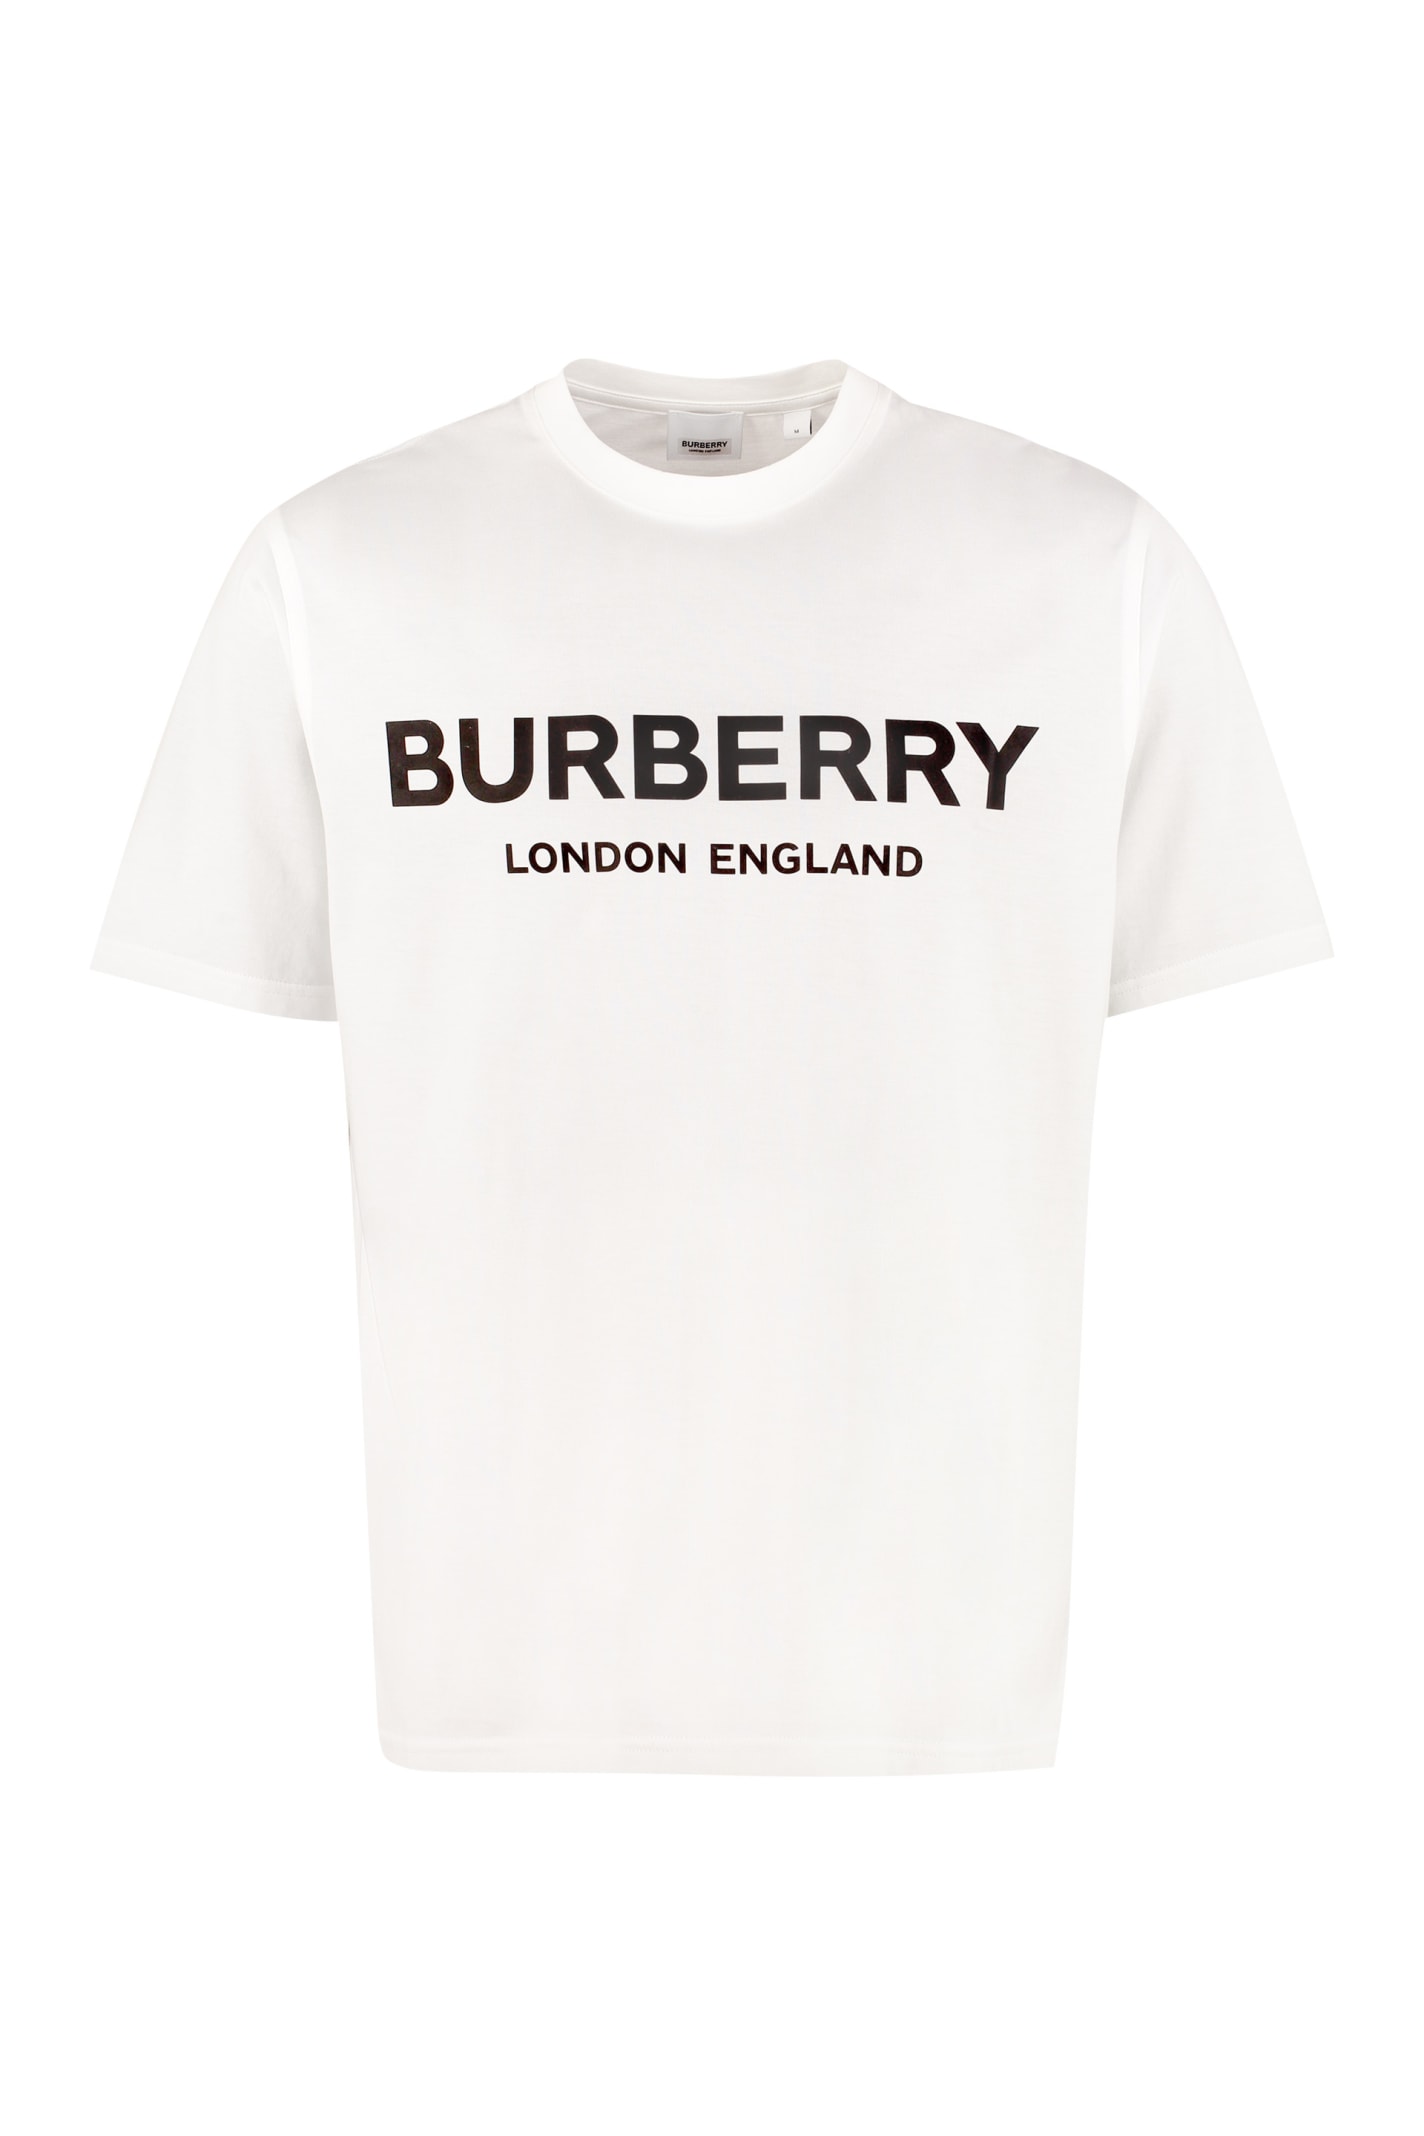 burberry crew neck shirt